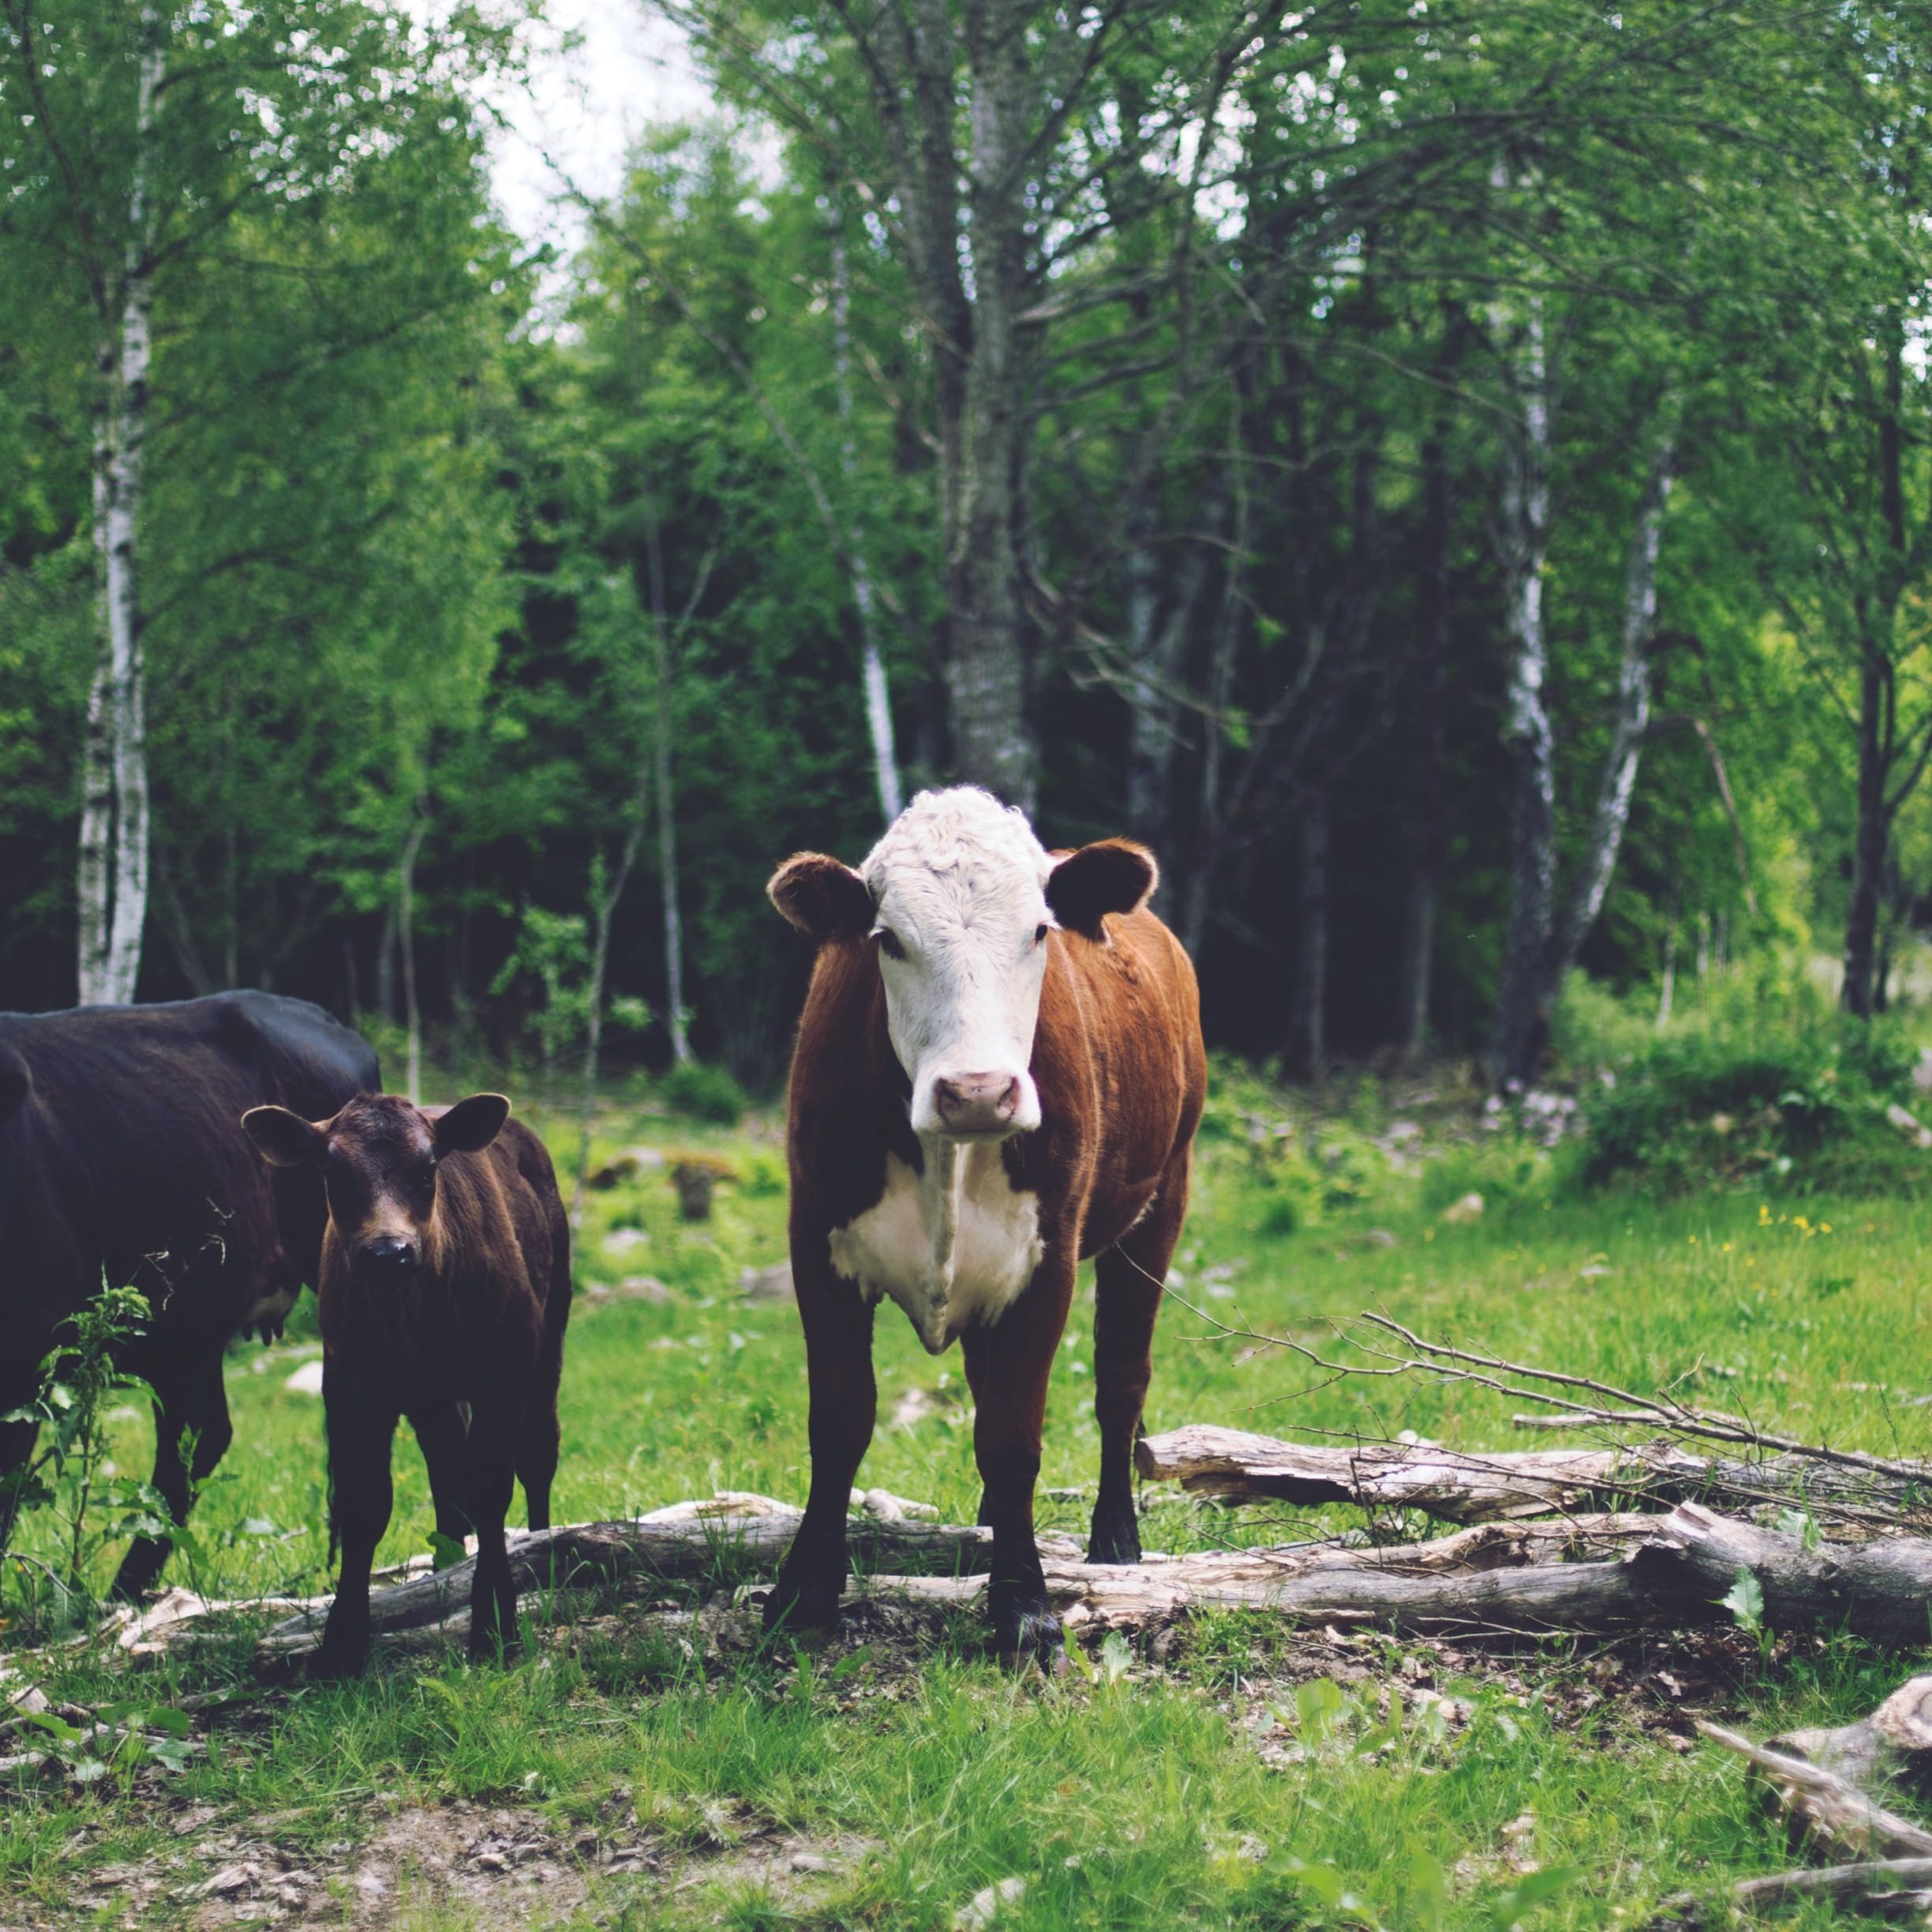 Landscape forest animal cattle | wallpaper.sc iPad